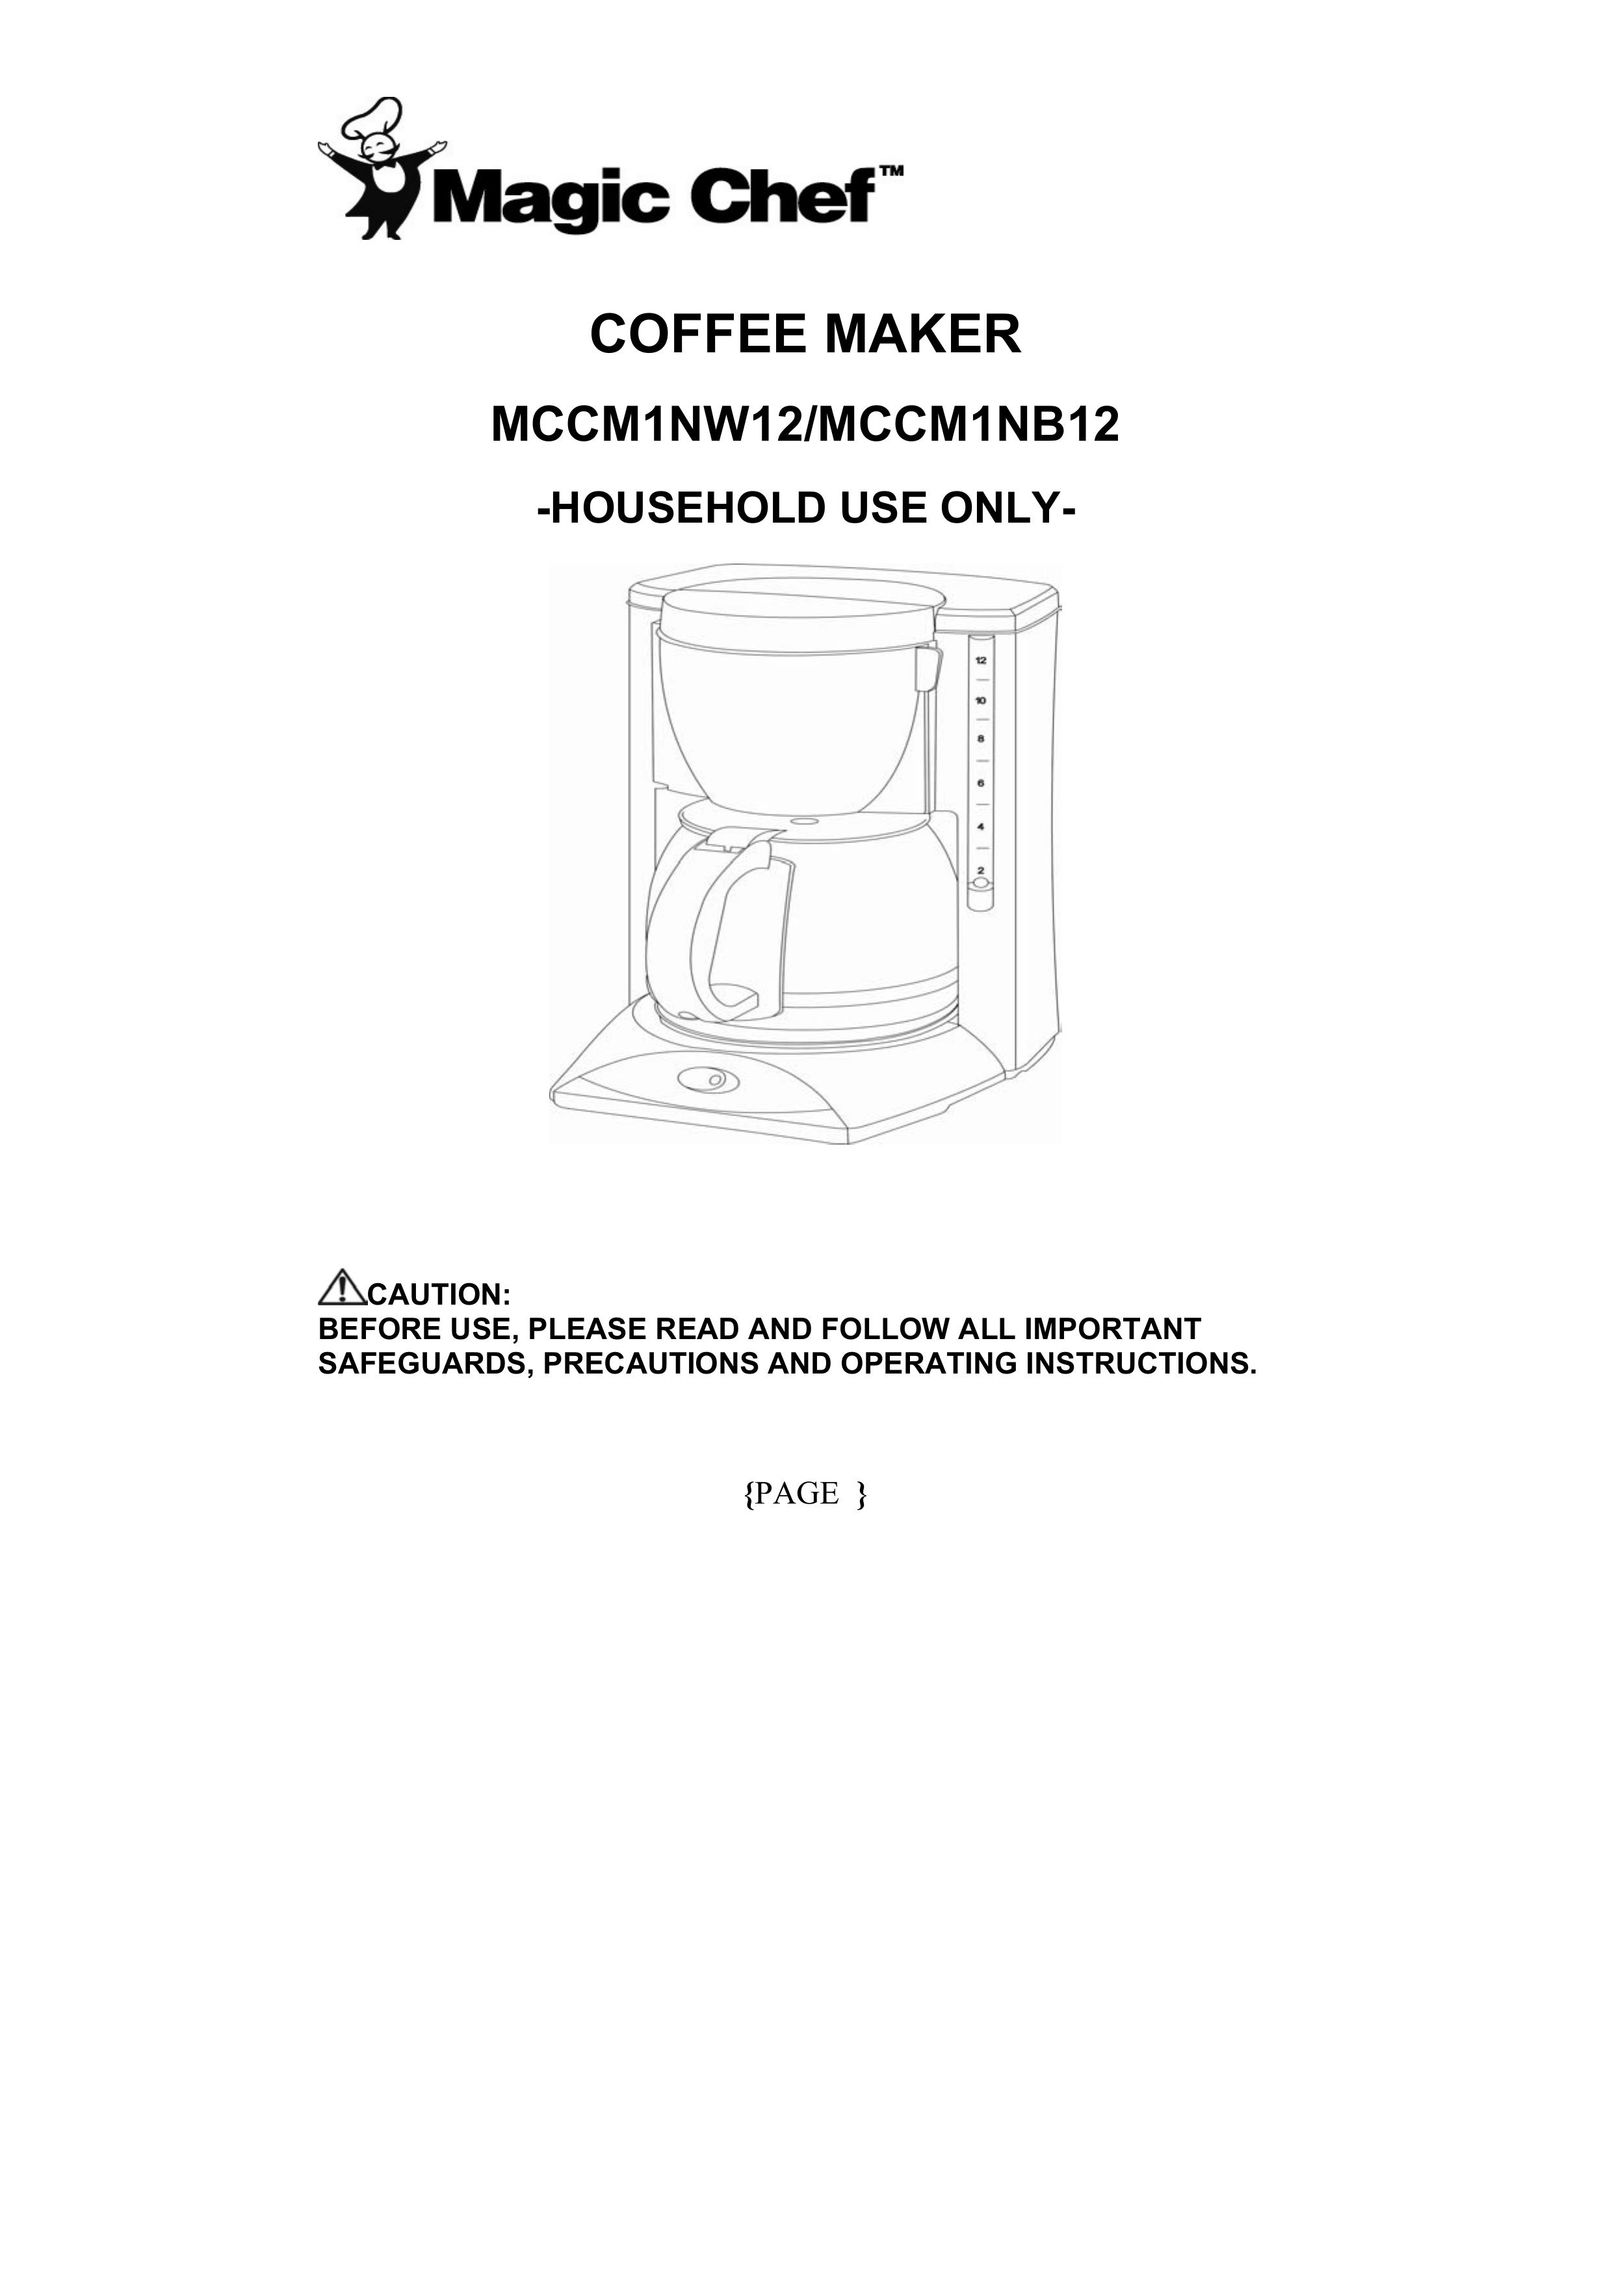 Magic Chef MCCM1NB12 Coffeemaker User Manual